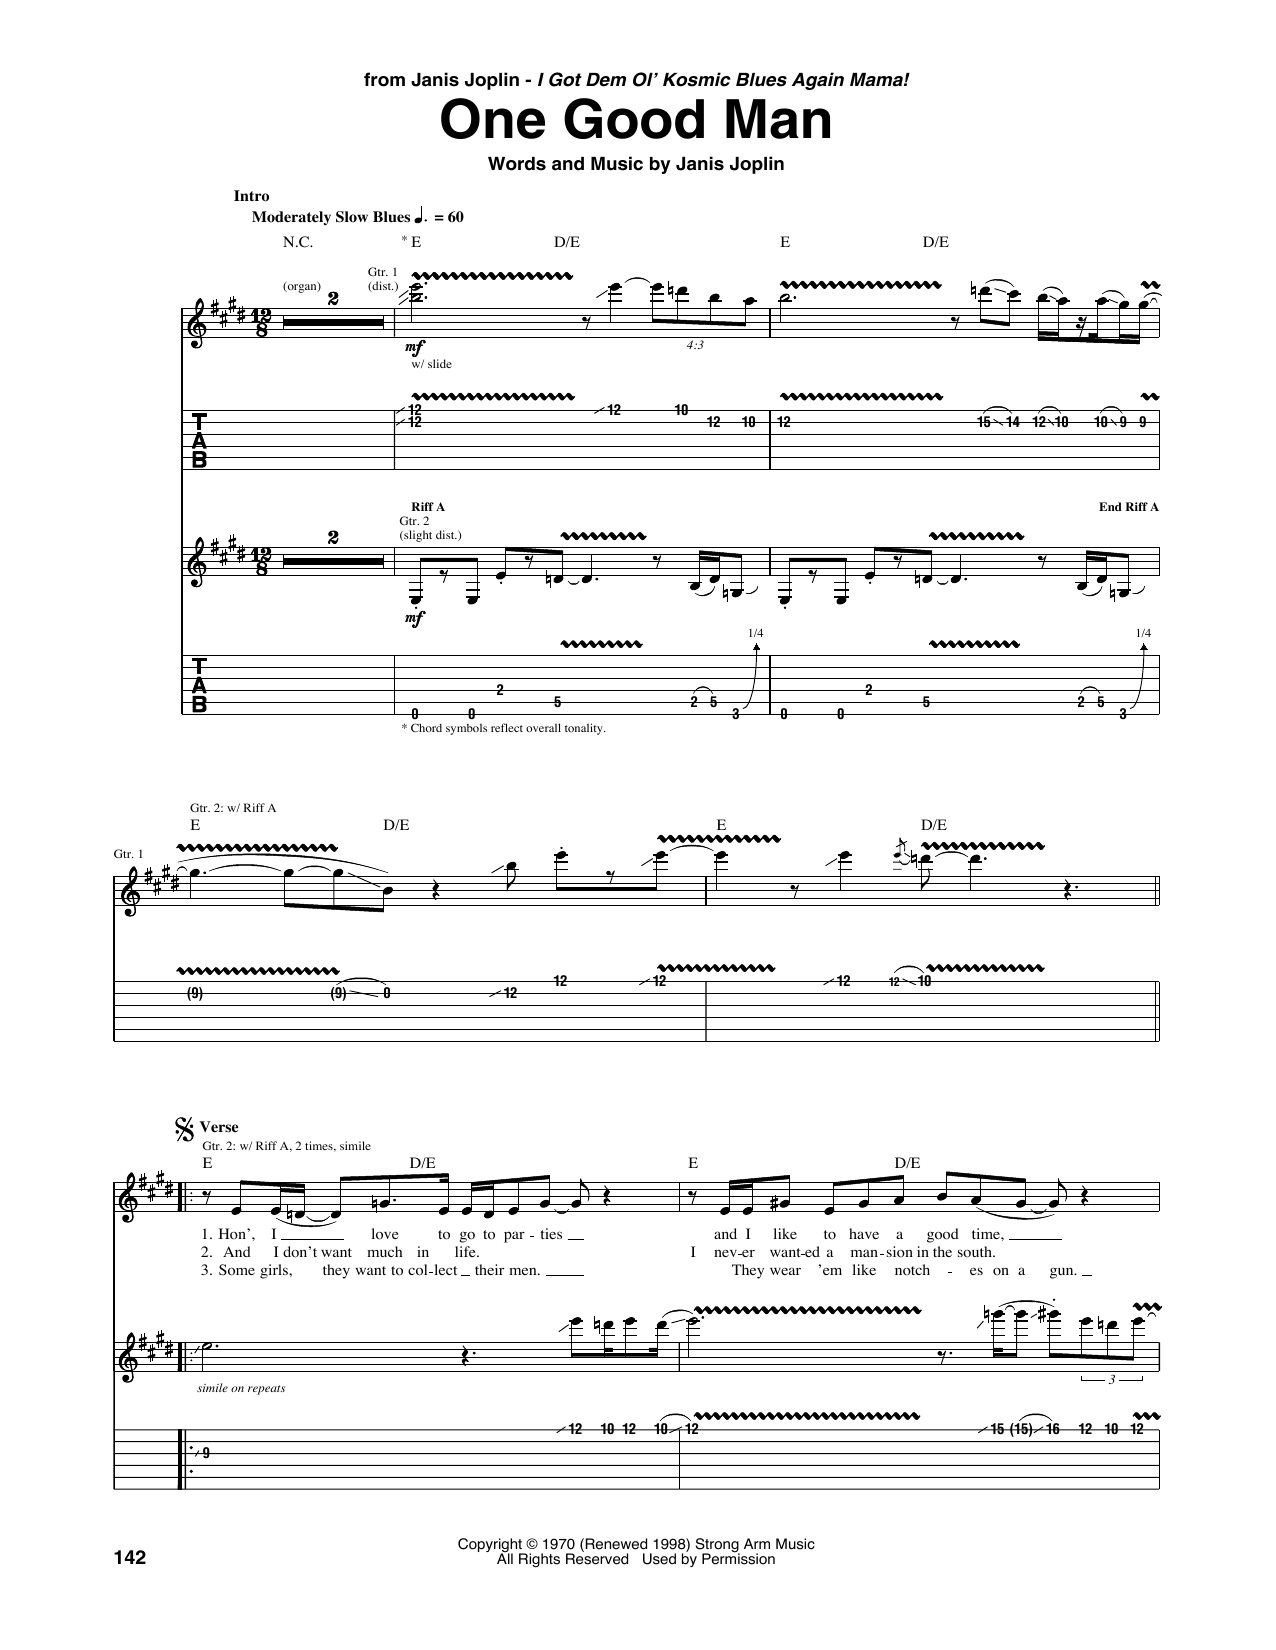 Janis Joplin One Good Man Sheet Music Notes & Chords for Guitar Tab - Download or Print PDF